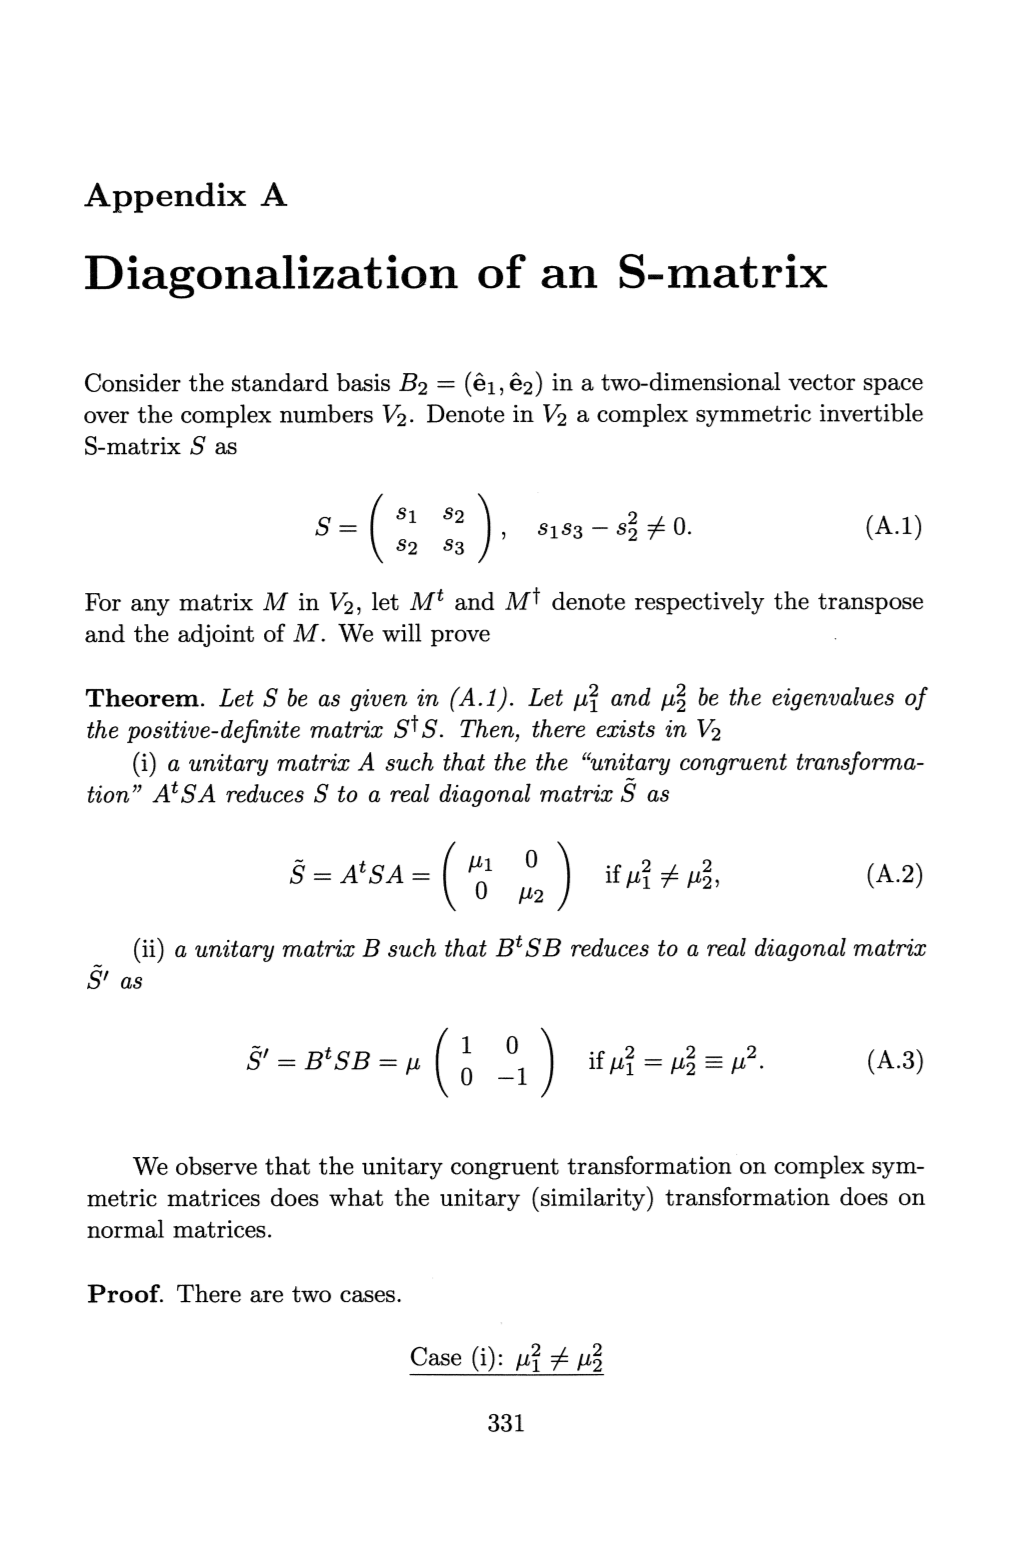 Diagonalization of an S-Matrix